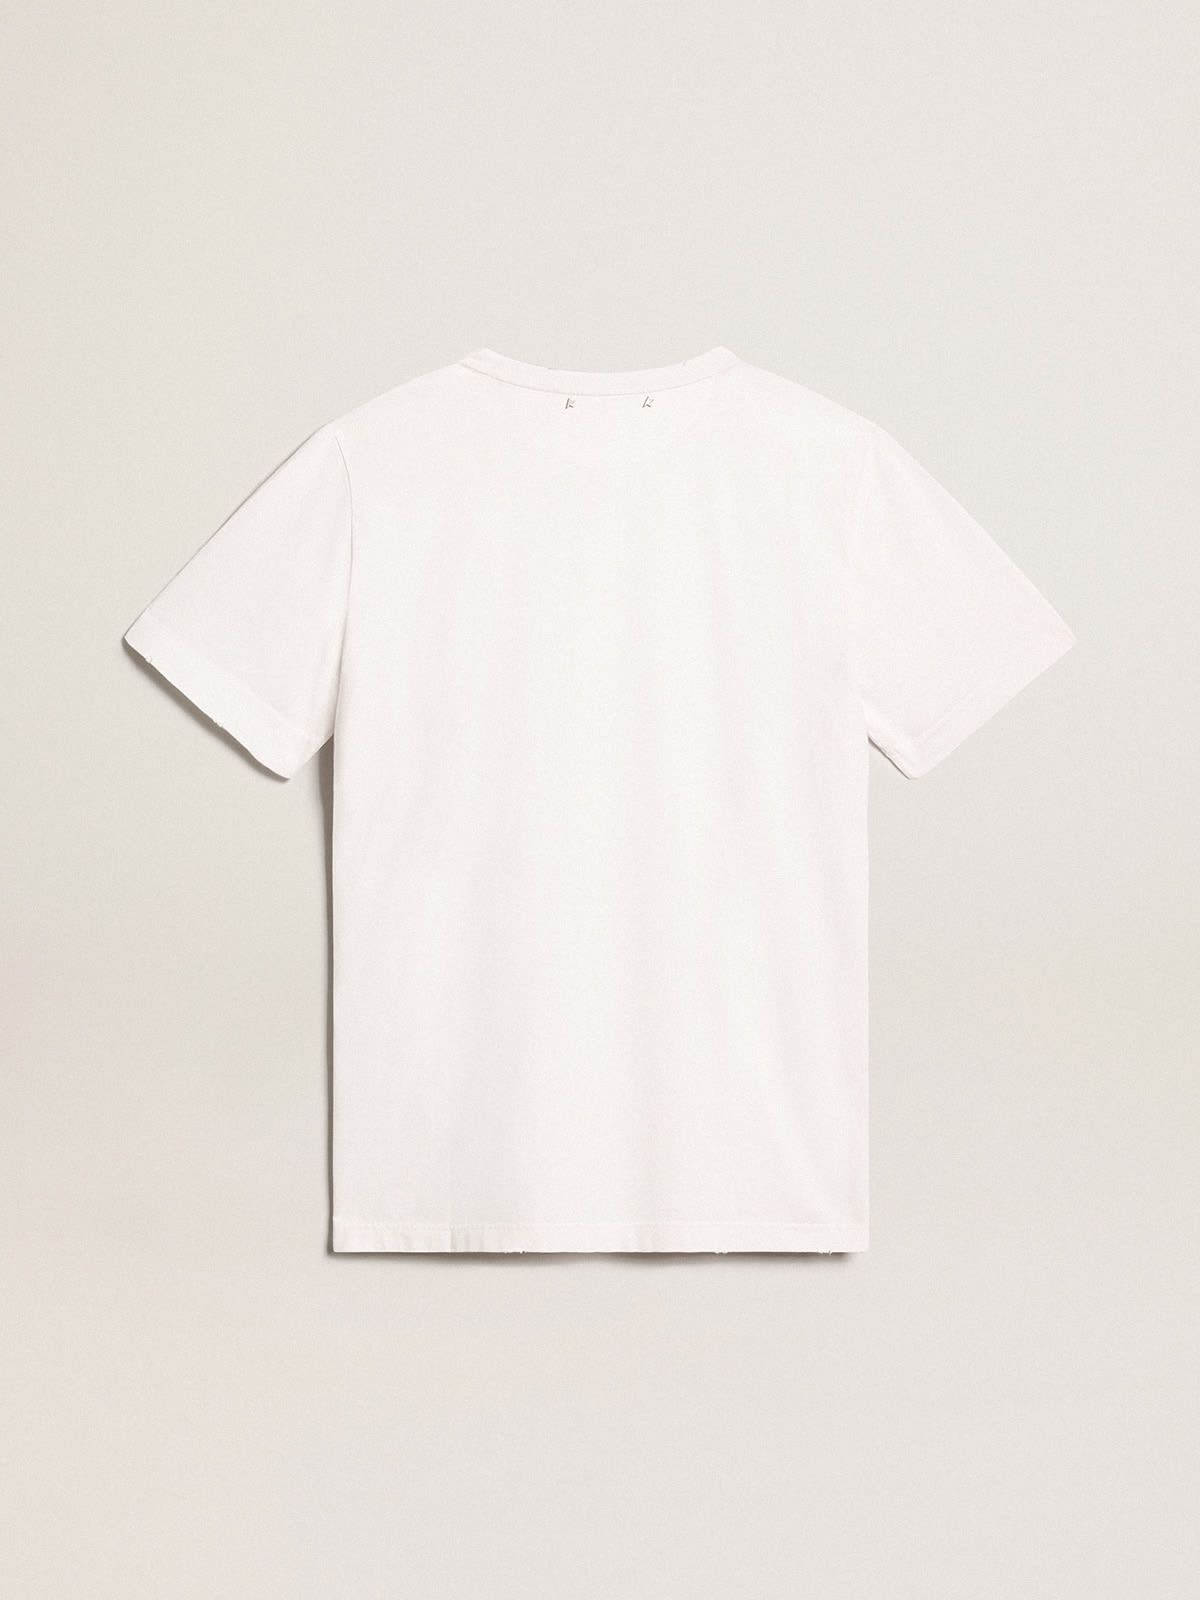 Golden Goose - Camiseta masculina branca com tratamento desgastado in 